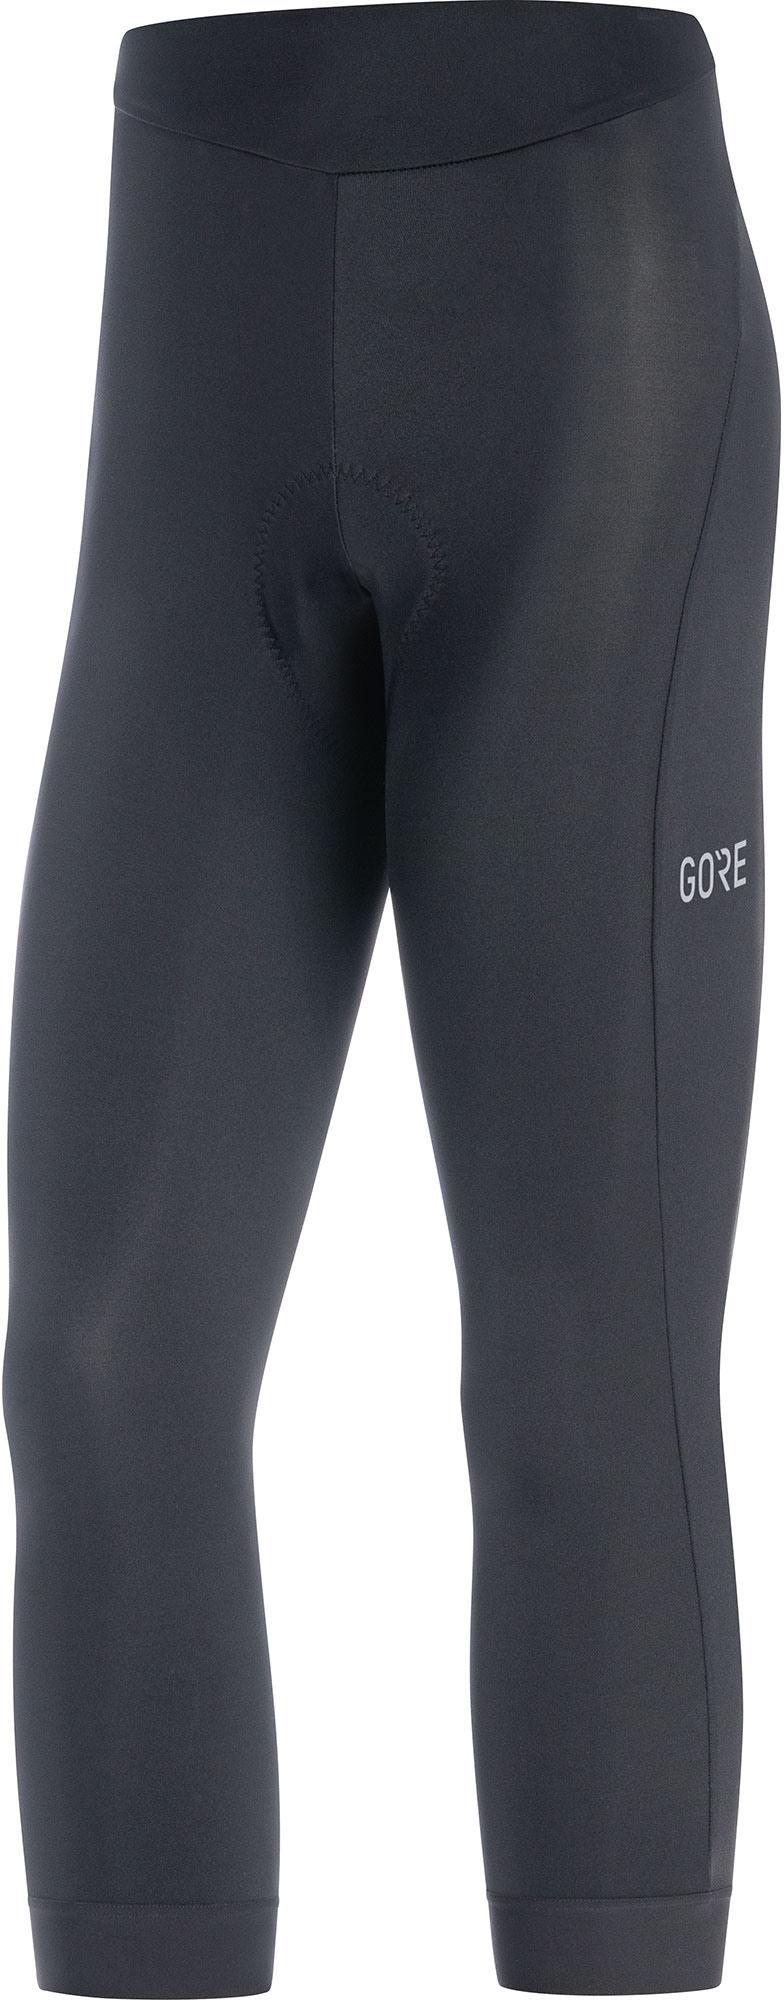 Gorewear Womens 3/4 Tights Plus - Black